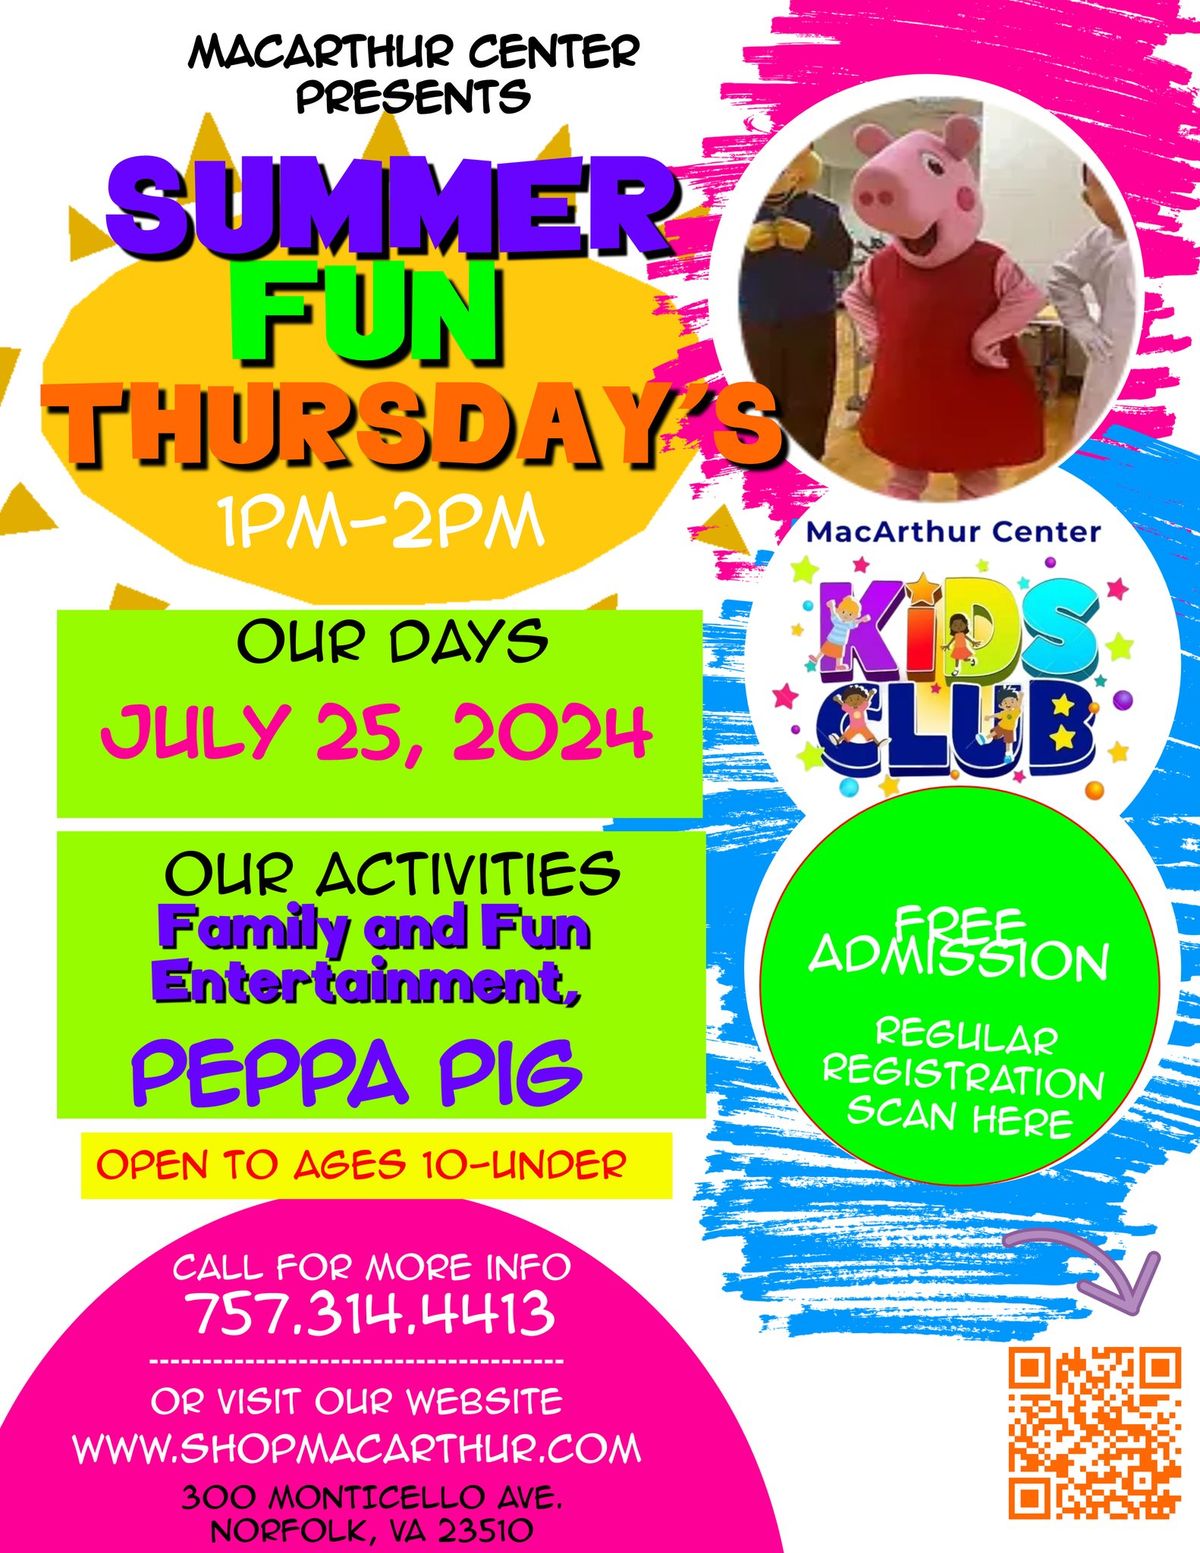 Summer Fun Thursdays at MacArthur Center! 